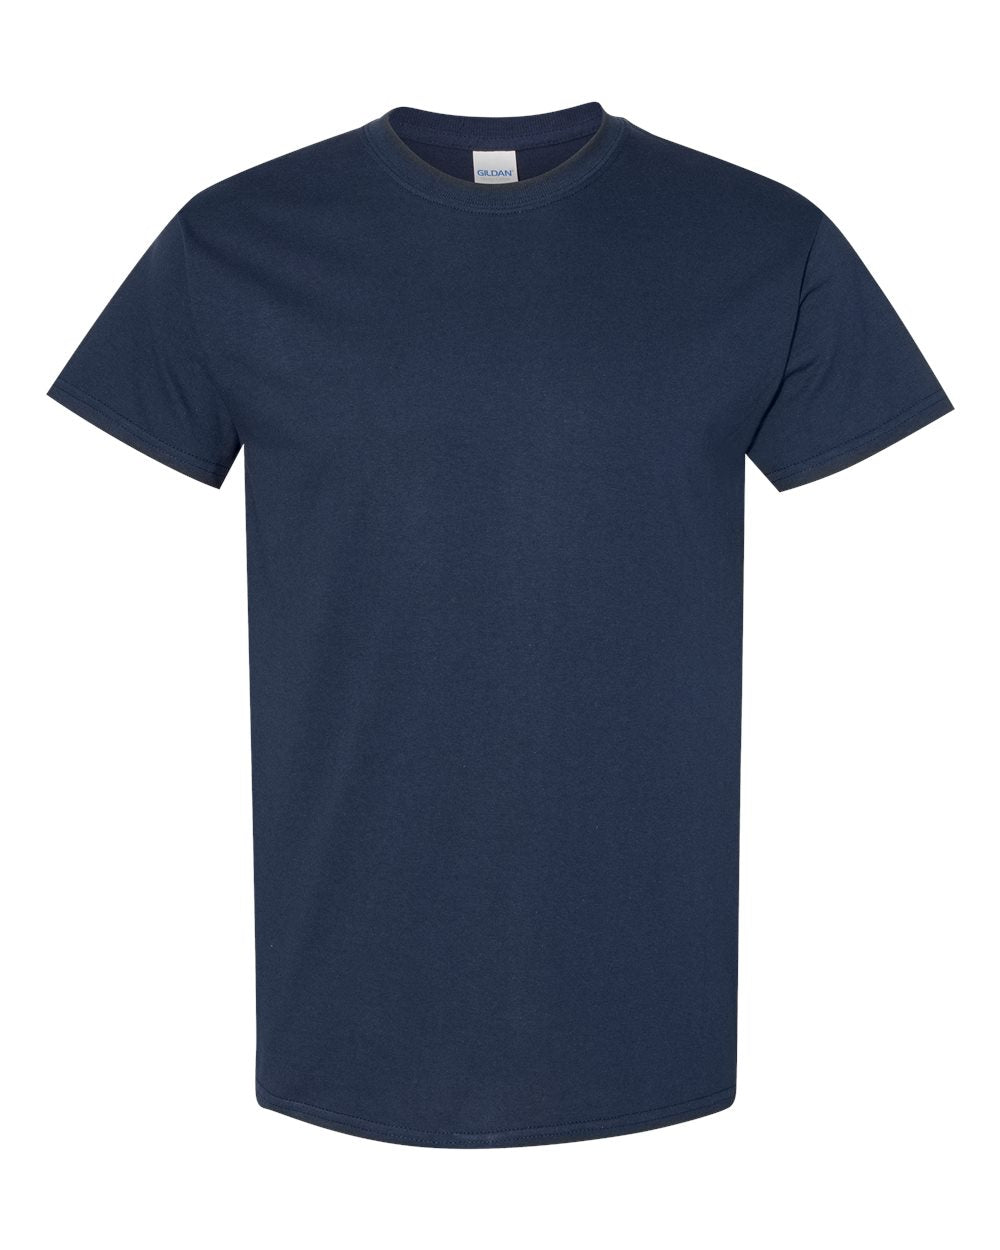 Pretreated Gildan 5000 Heavy Cotton T-Shirt - Navy